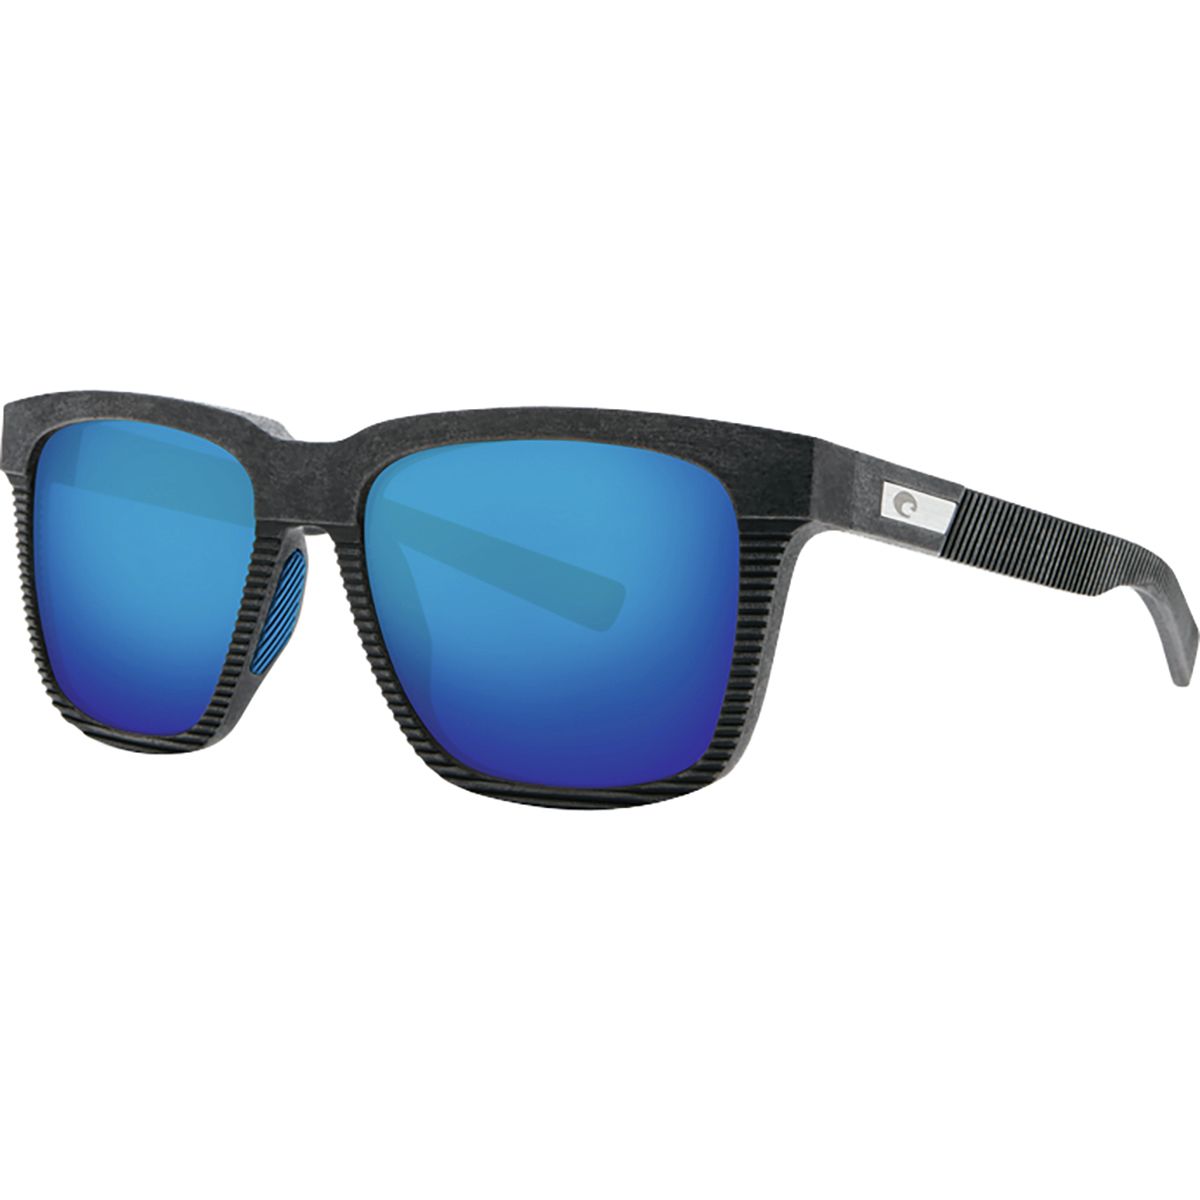 Costa Pescador 580G Polarized Sunglasses